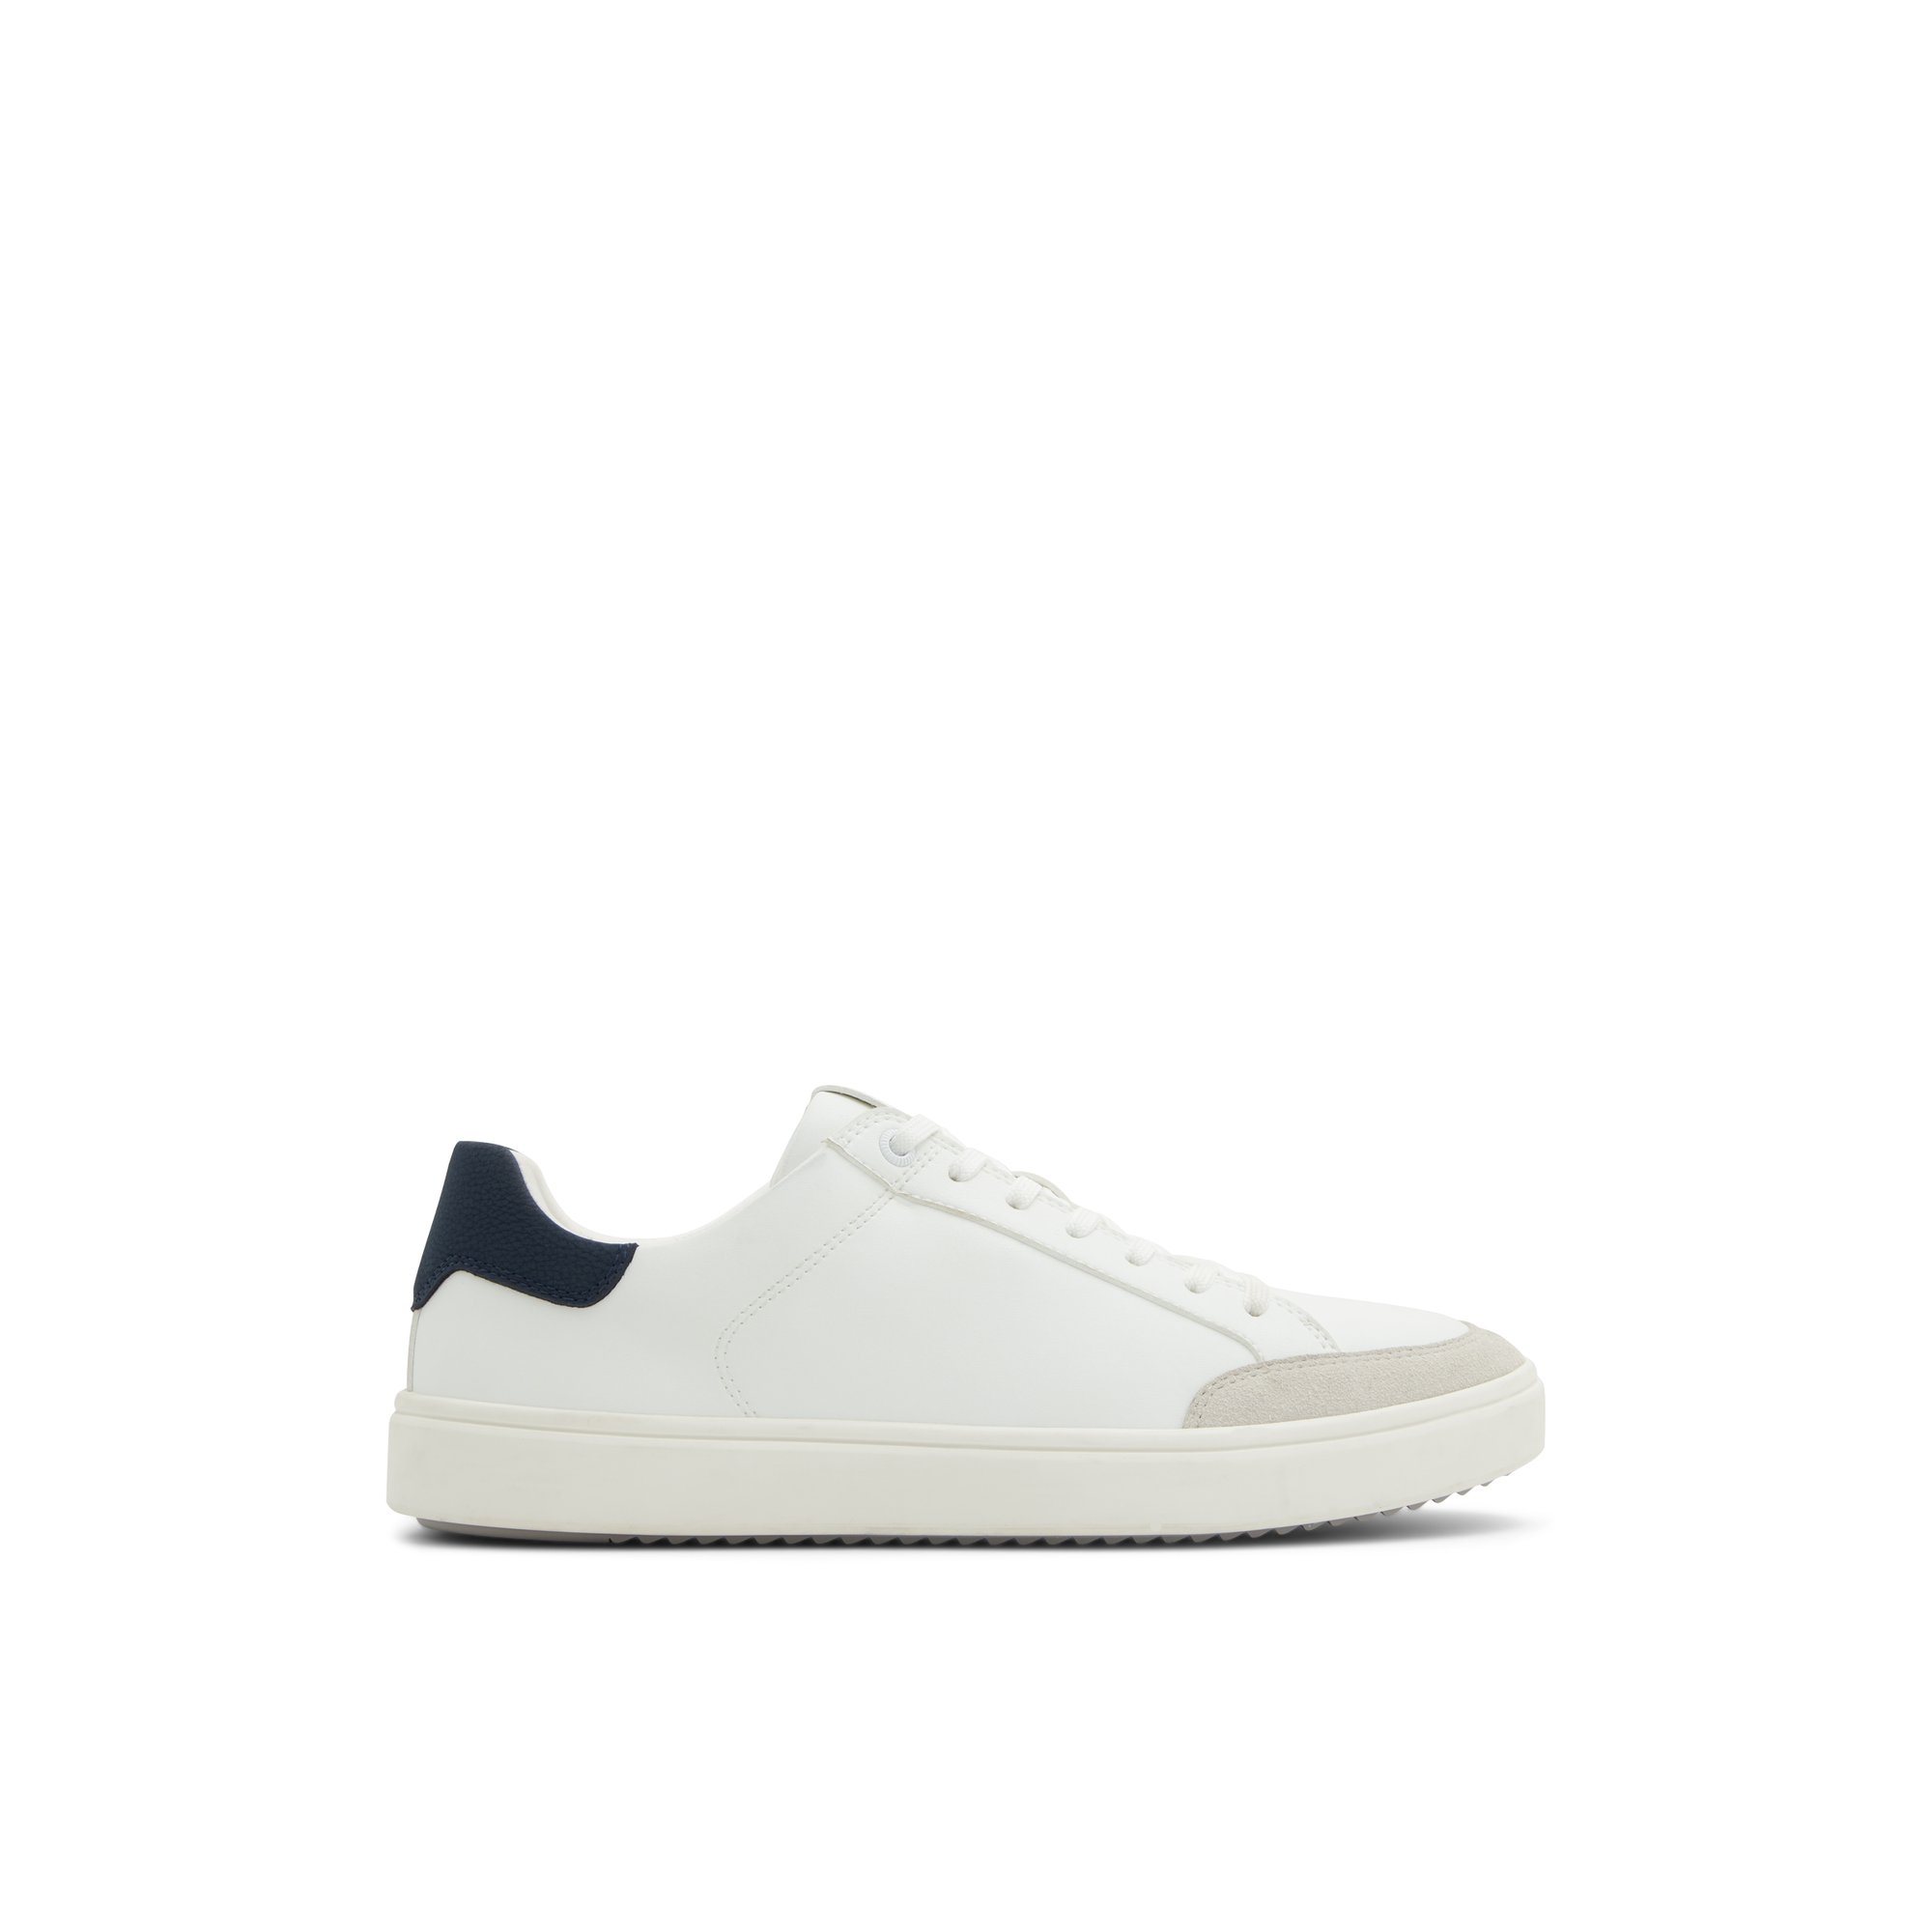 ALDO Courtspec - Men's Sneakers Low Top - White